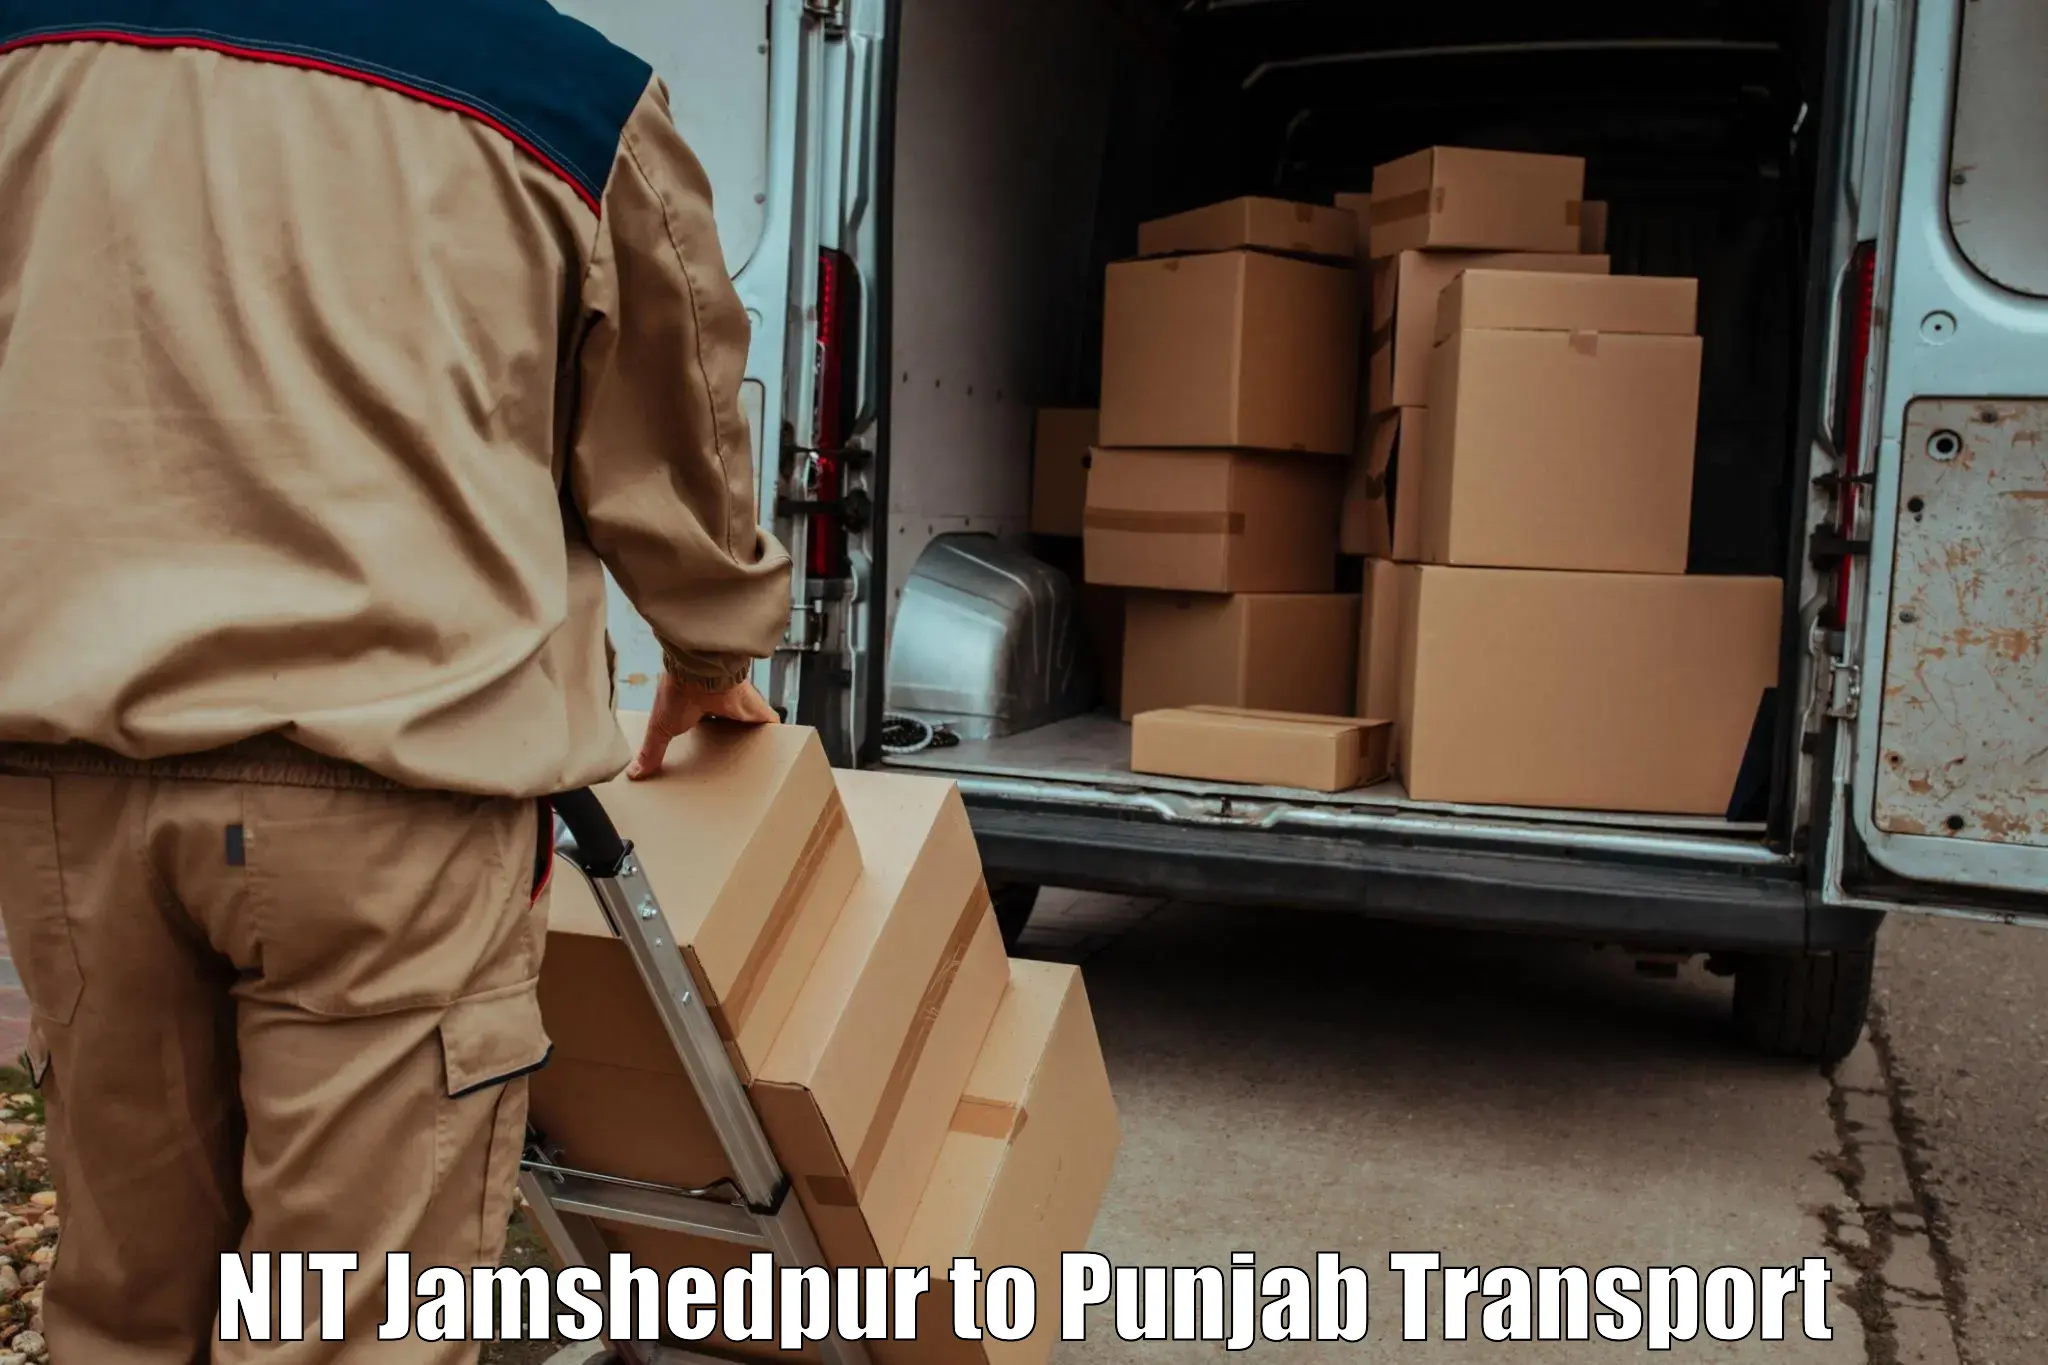 Parcel transport services NIT Jamshedpur to Malout